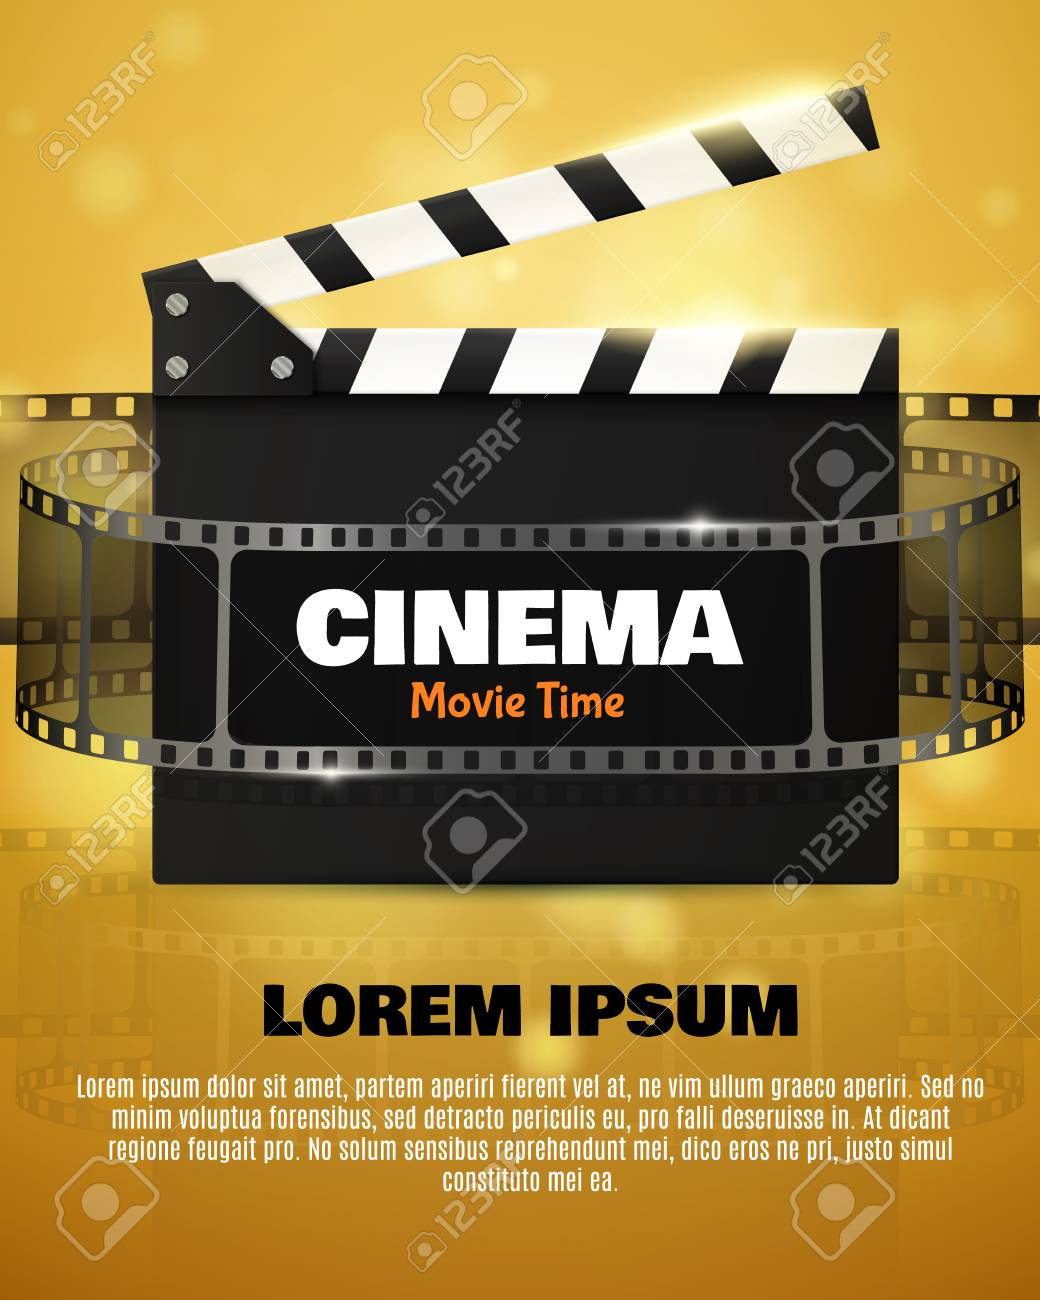 Cinema Flyer Or Poster. Vector Illustration. Film Festival Template Within Film Festival Brochure Template